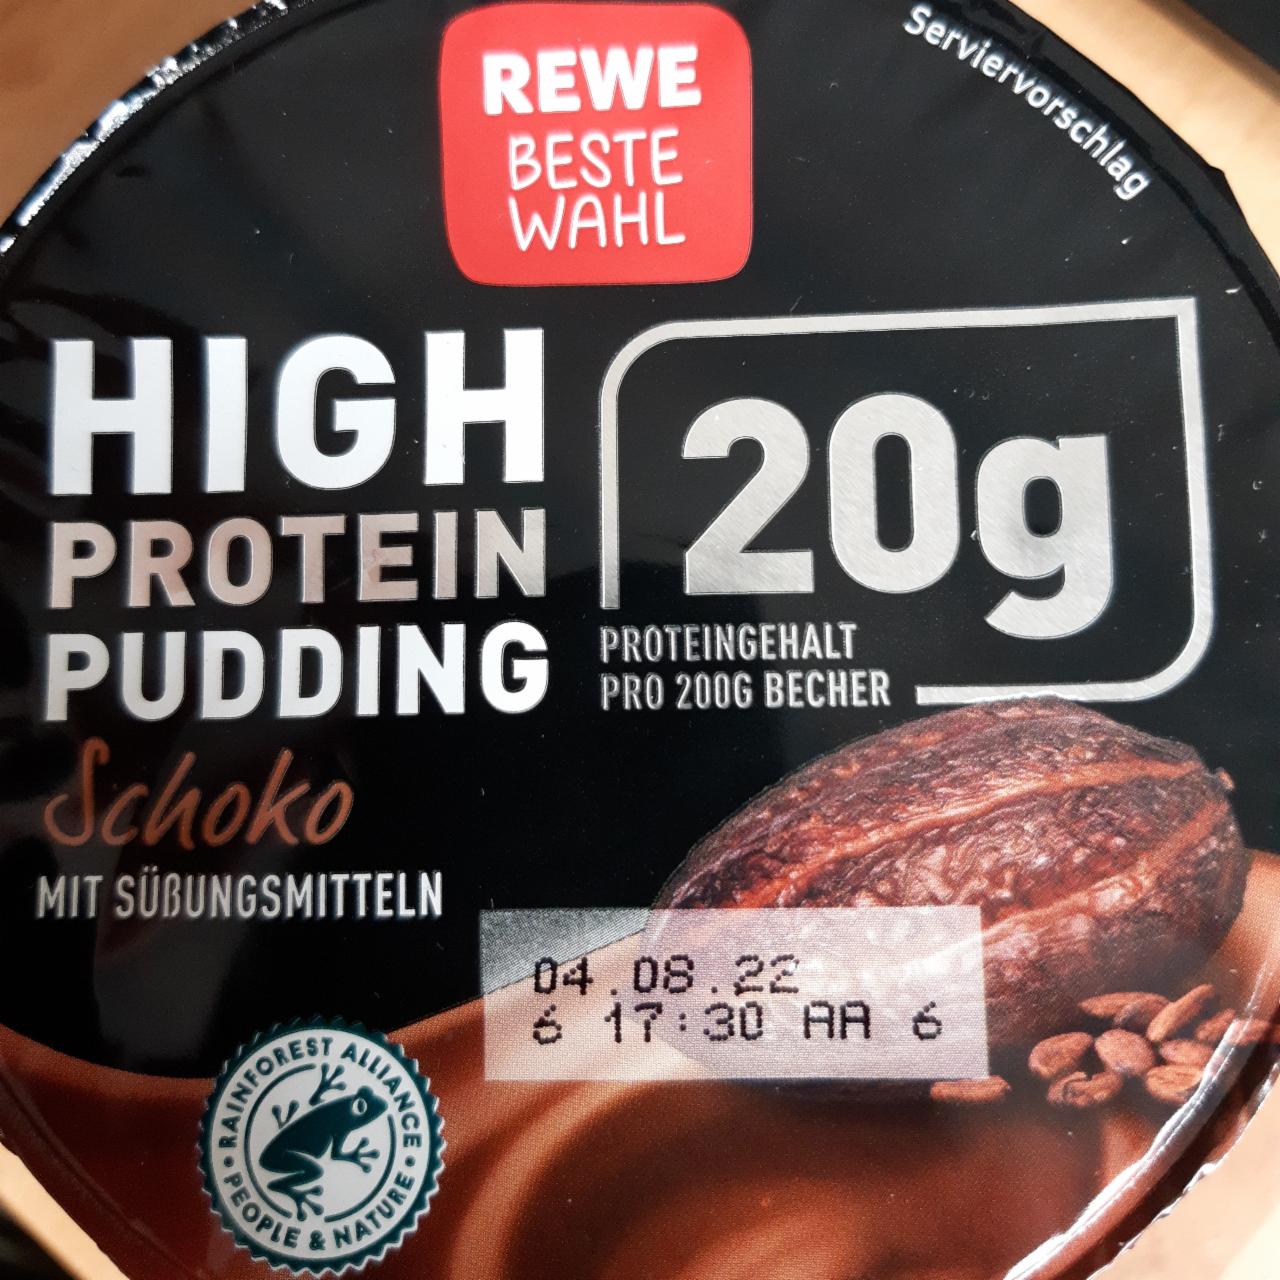 Фото - пудинг High protein pudding Schoko Rewe beste wahl